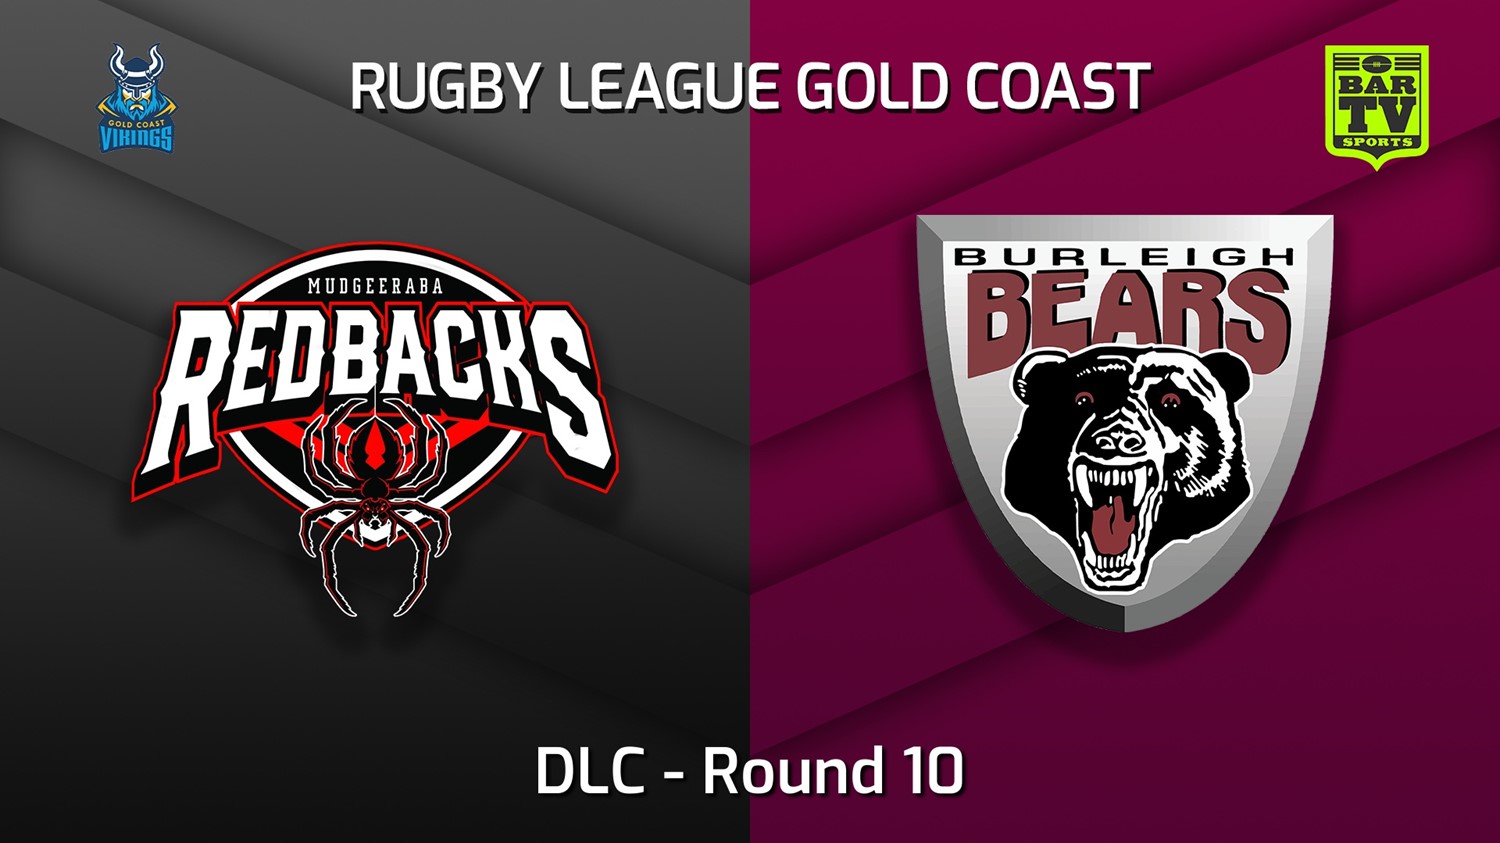 220612-Gold Coast Round 10 - DLC - Mudgeeraba Redbacks v Burleigh Bears Slate Image